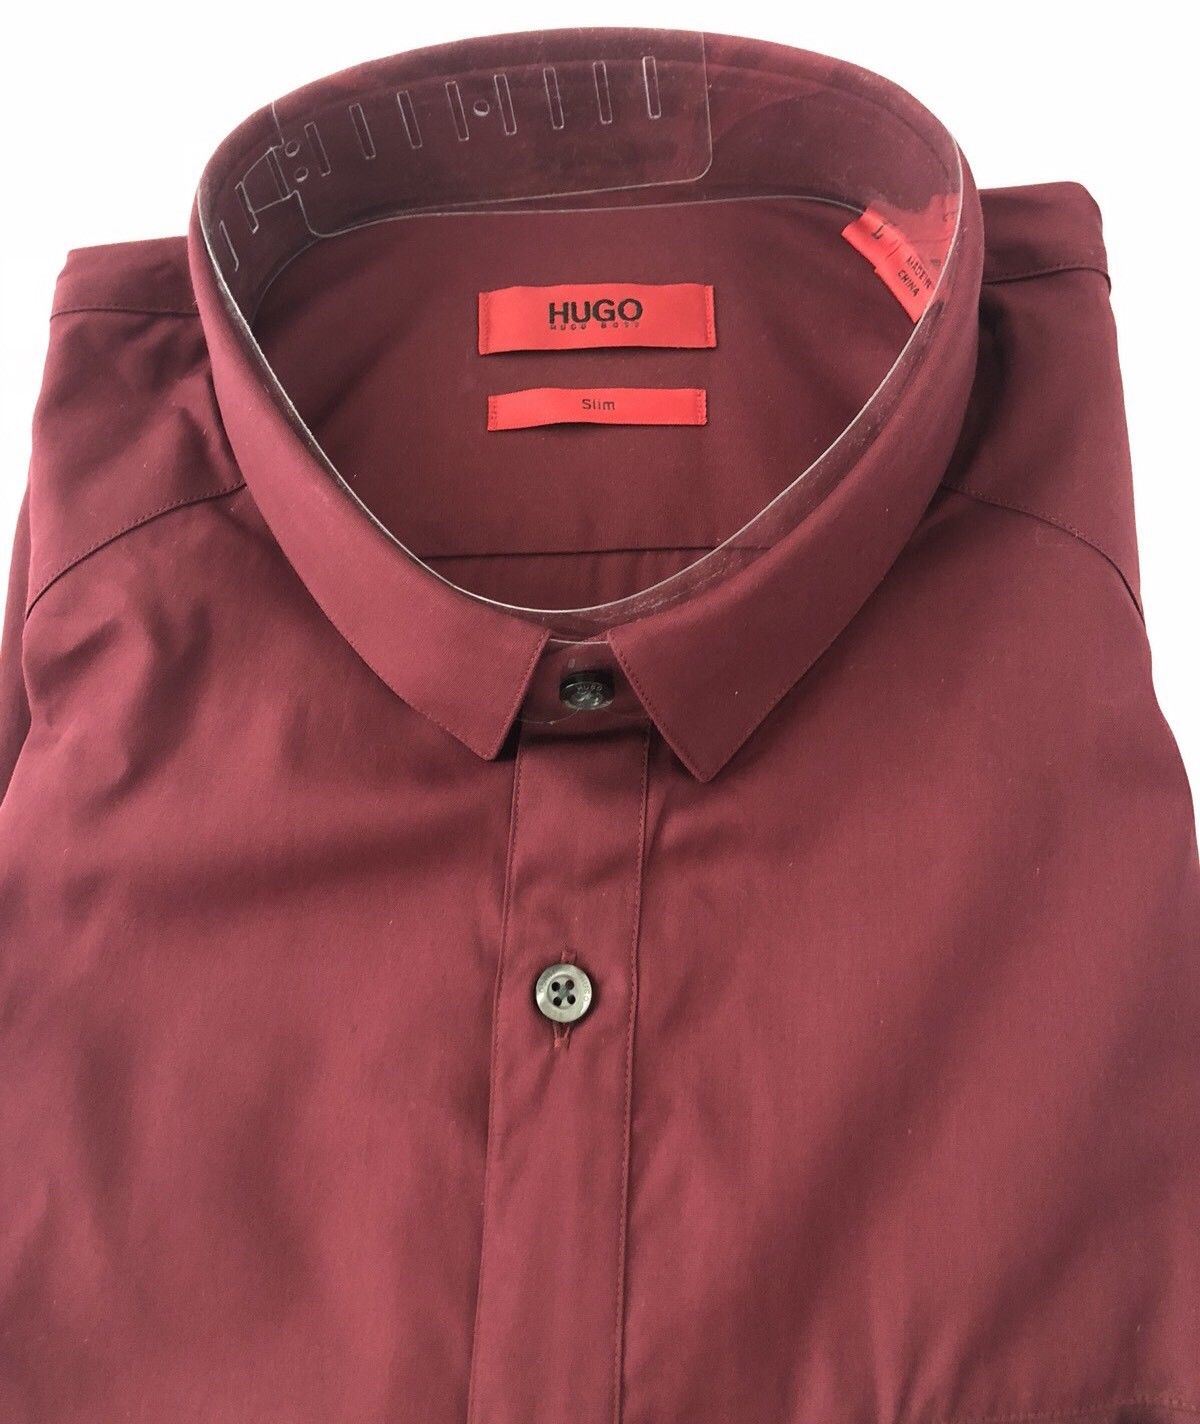 NWT $165 BOSS Hugo Boss Mens Edell Modern Slim Fit Dark Red Dress Shirt XL - BAYSUPERSTORE